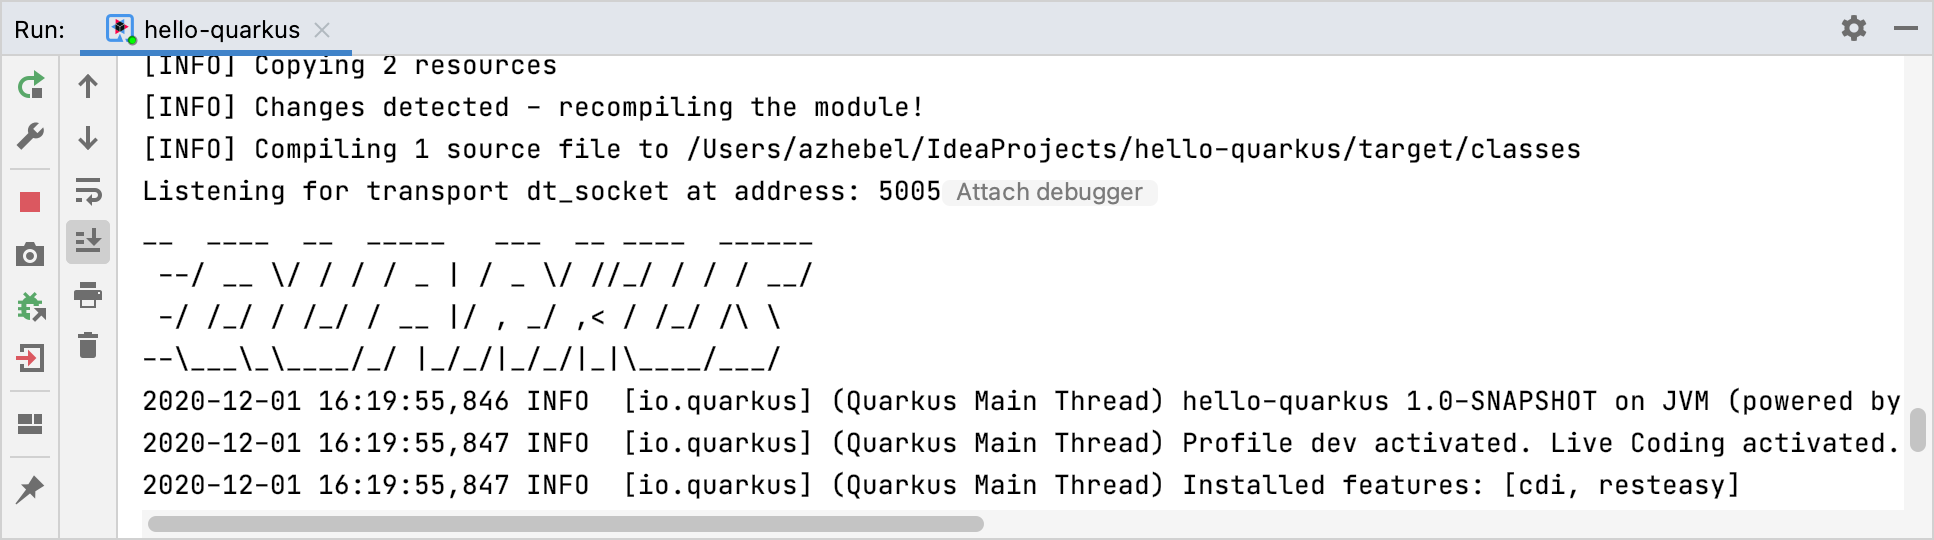 Quarkus 应用程序在“运行”工具窗口中运行